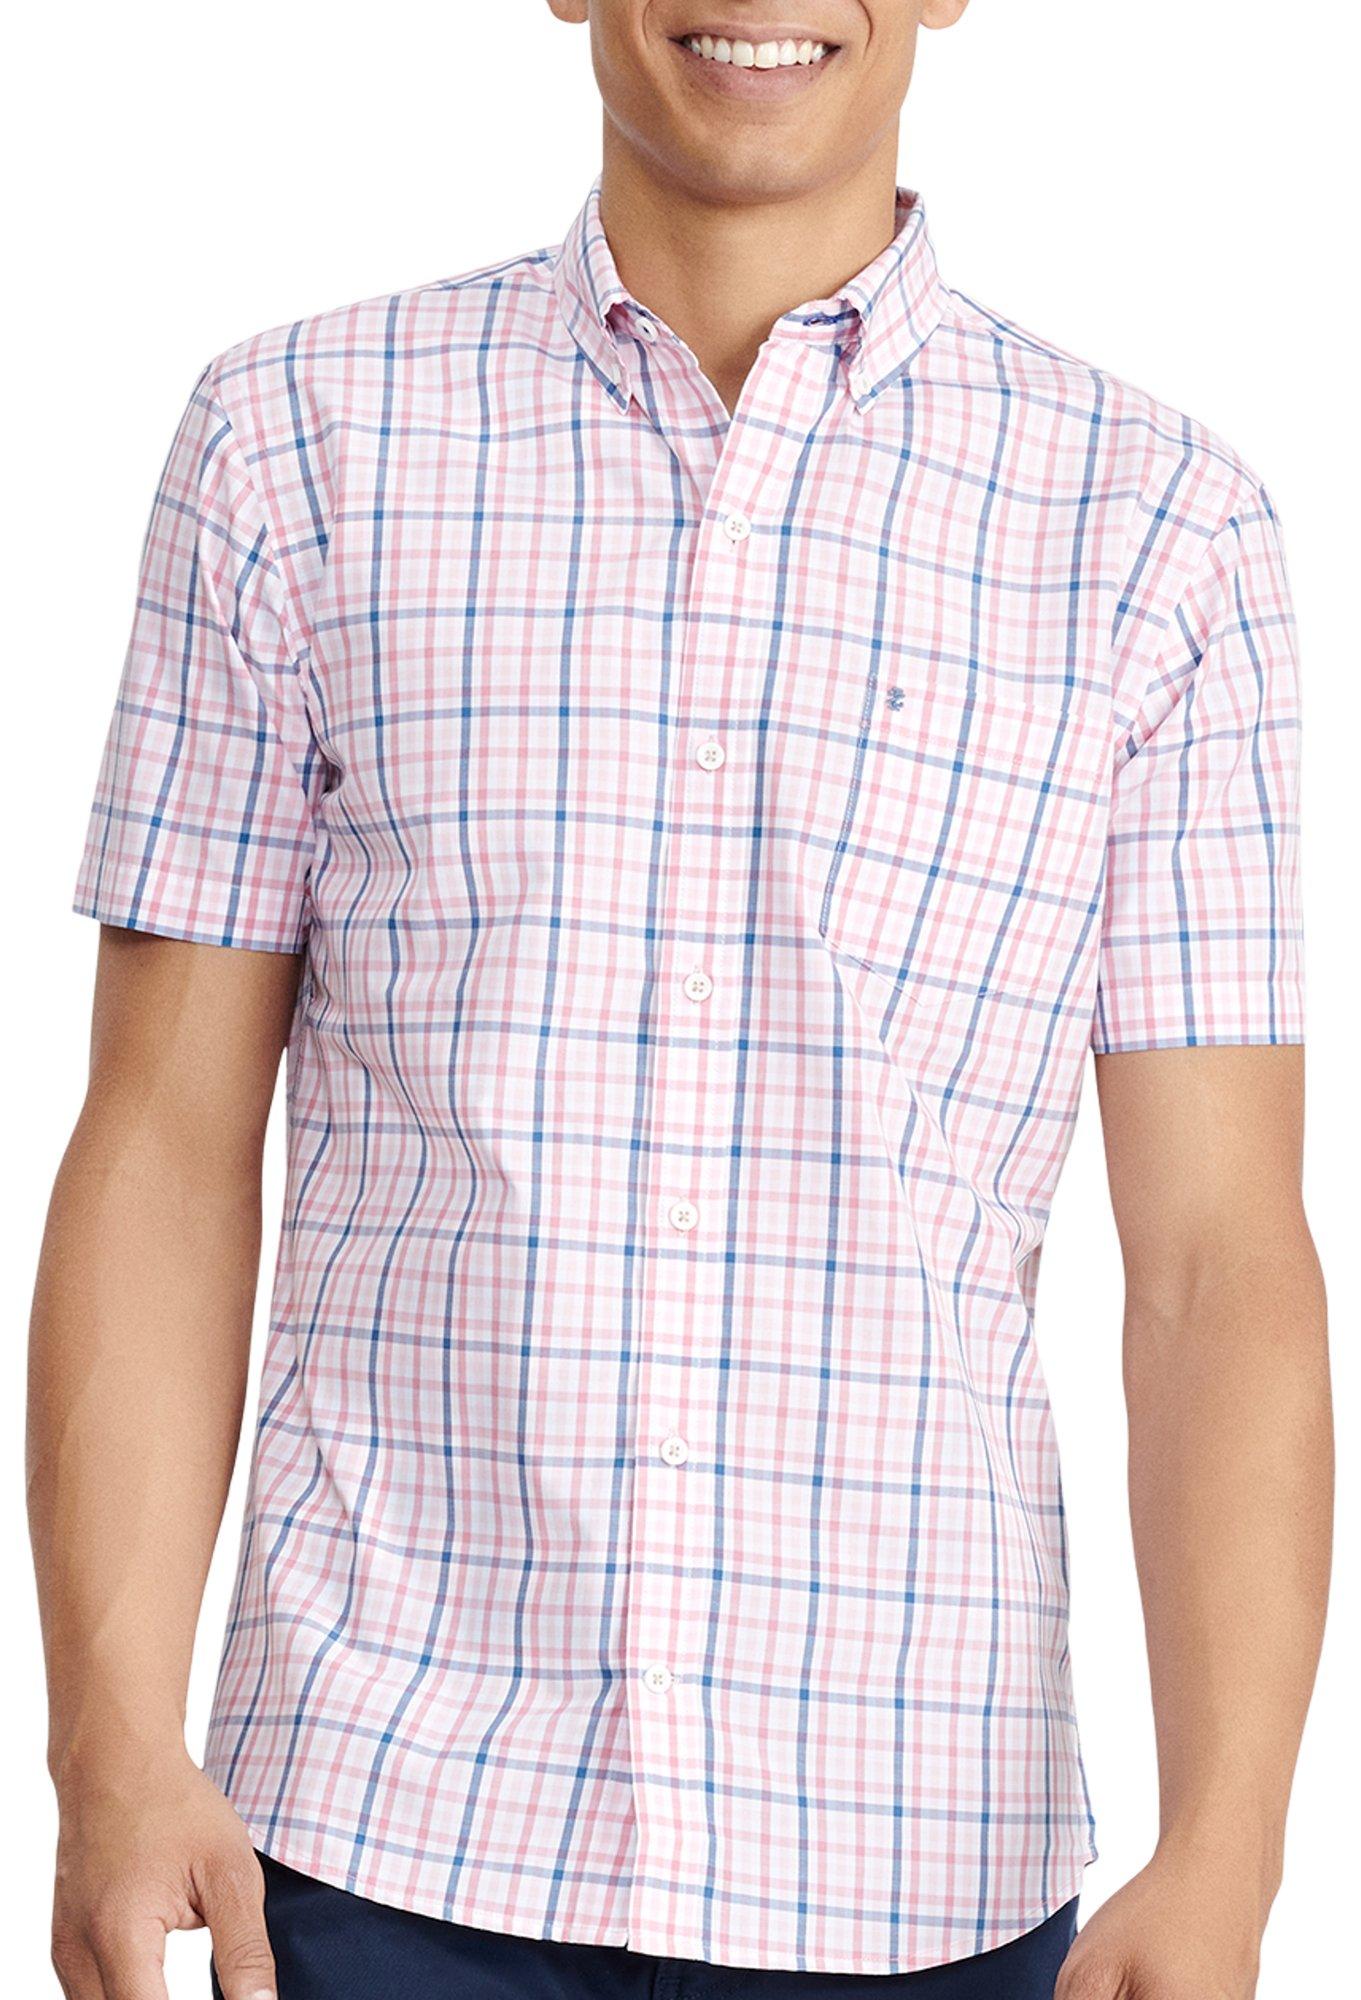 IZOD Mens Pink Plaid Short Sleeve Button Up Shirt